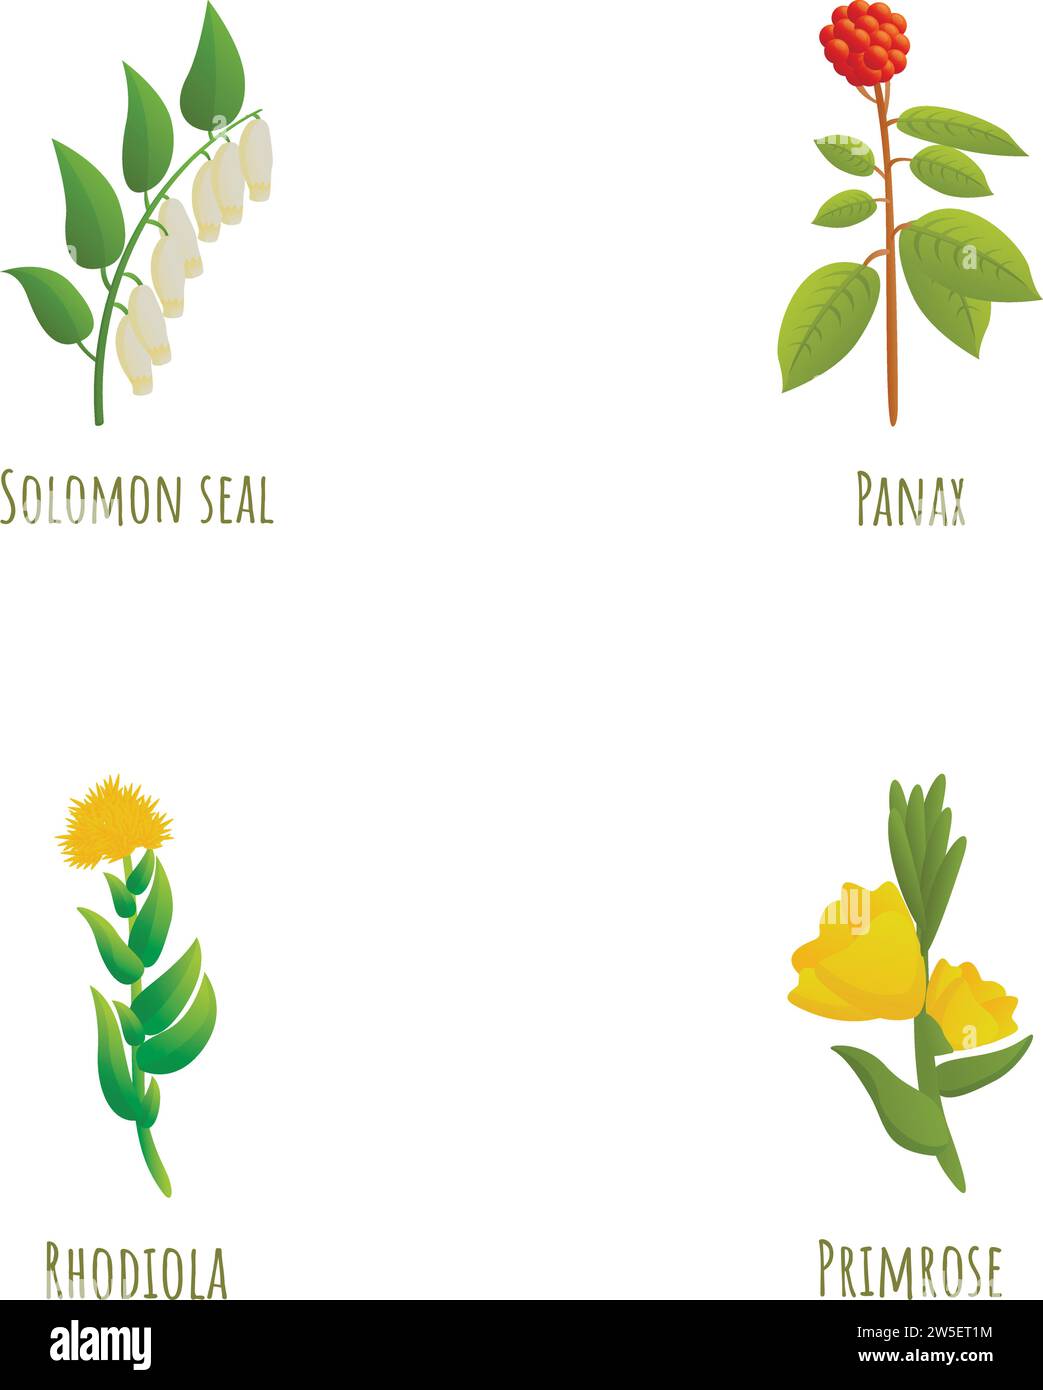 Medicinal plant icons set cartoon vector. Solomon seal, panax rhodiola primrose. Plant nature environment Stock Vector